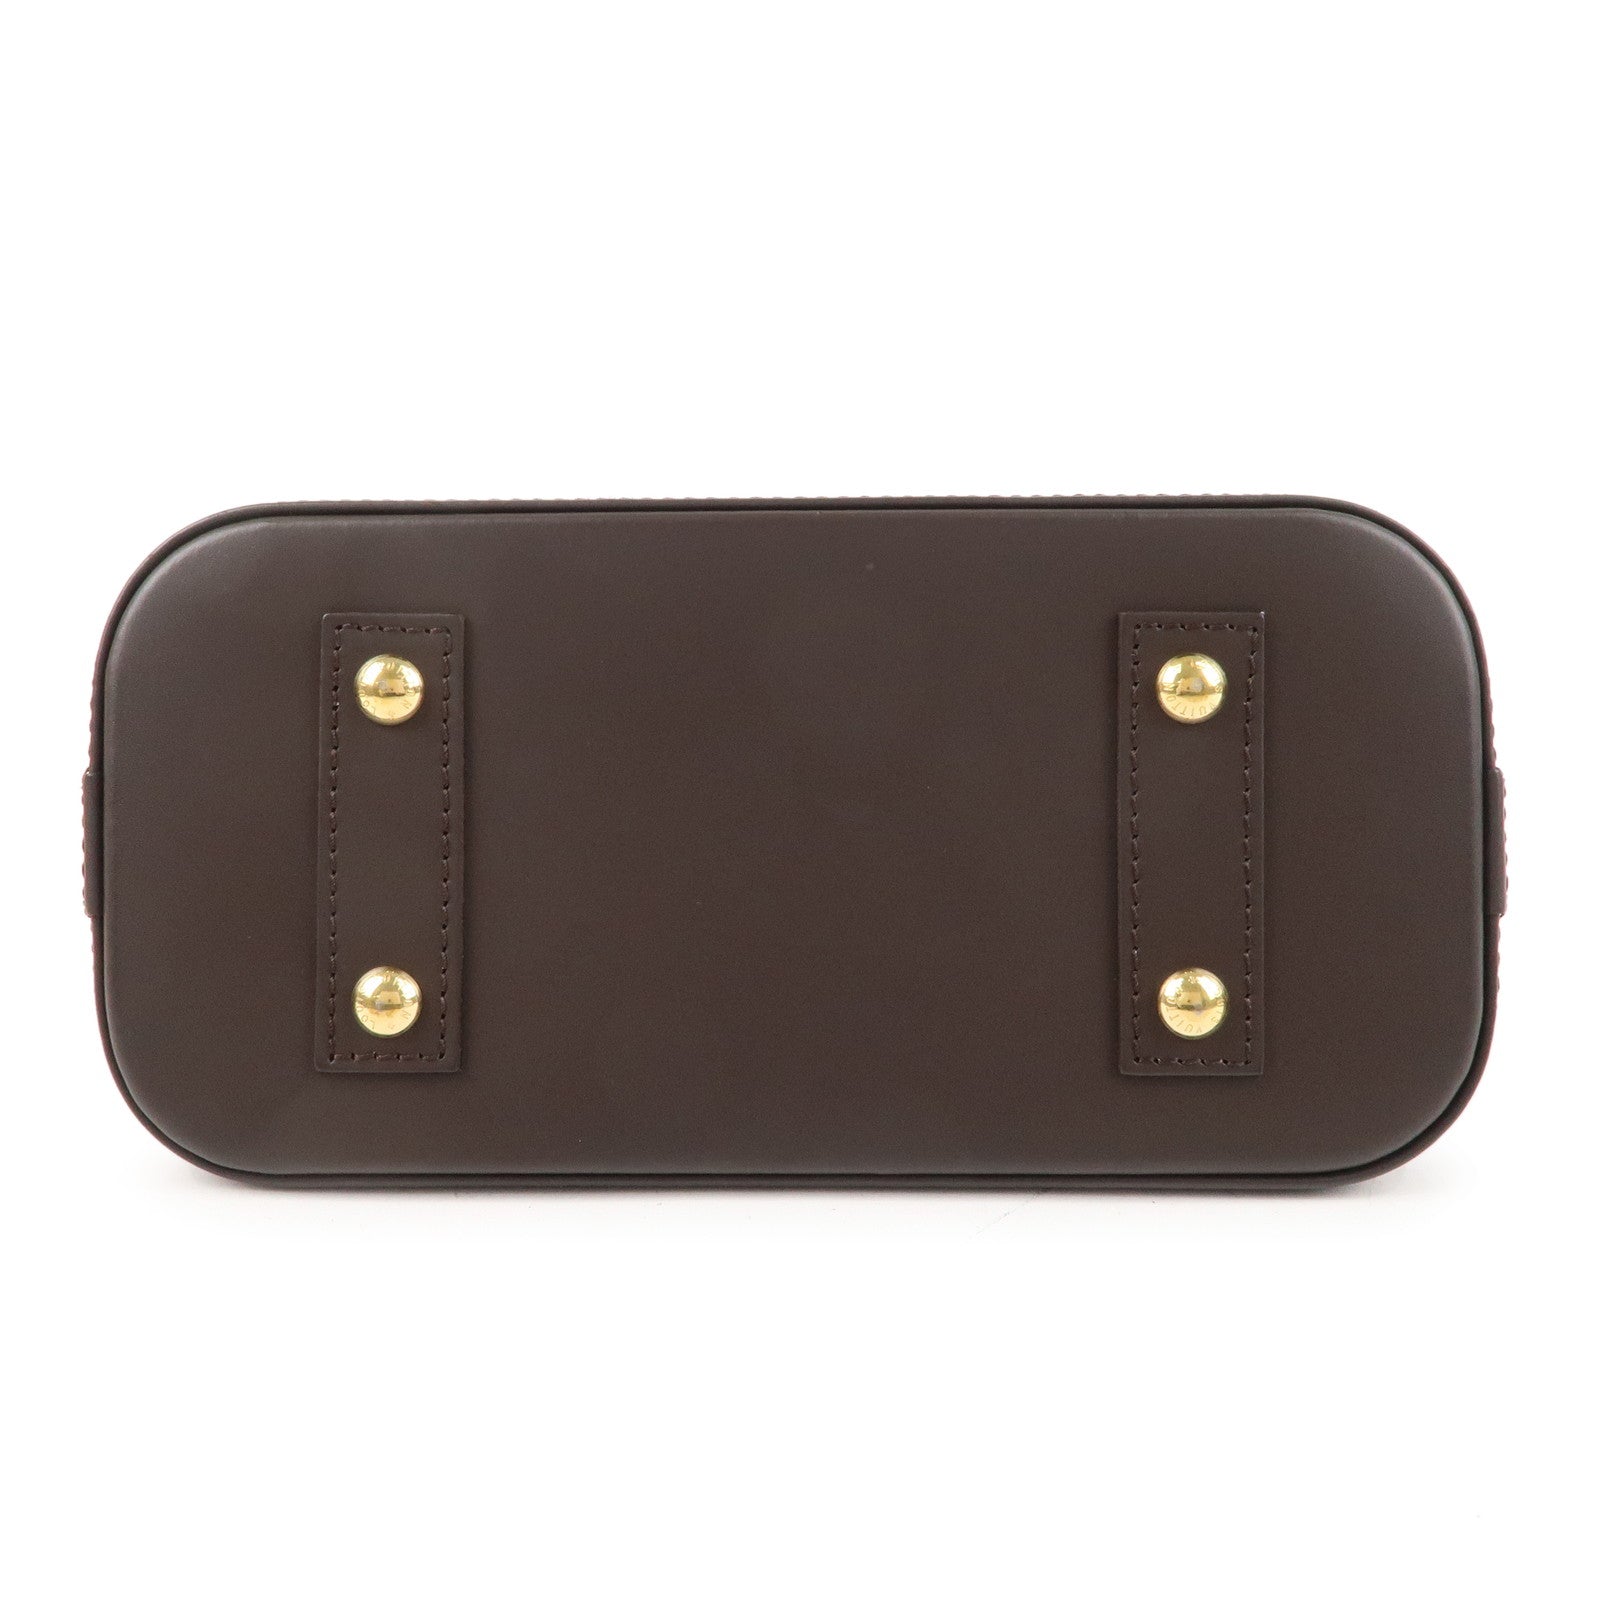 Louis Vuitton Damier Alma Bb Way Bag Handbag Shoulder Ebene N41221